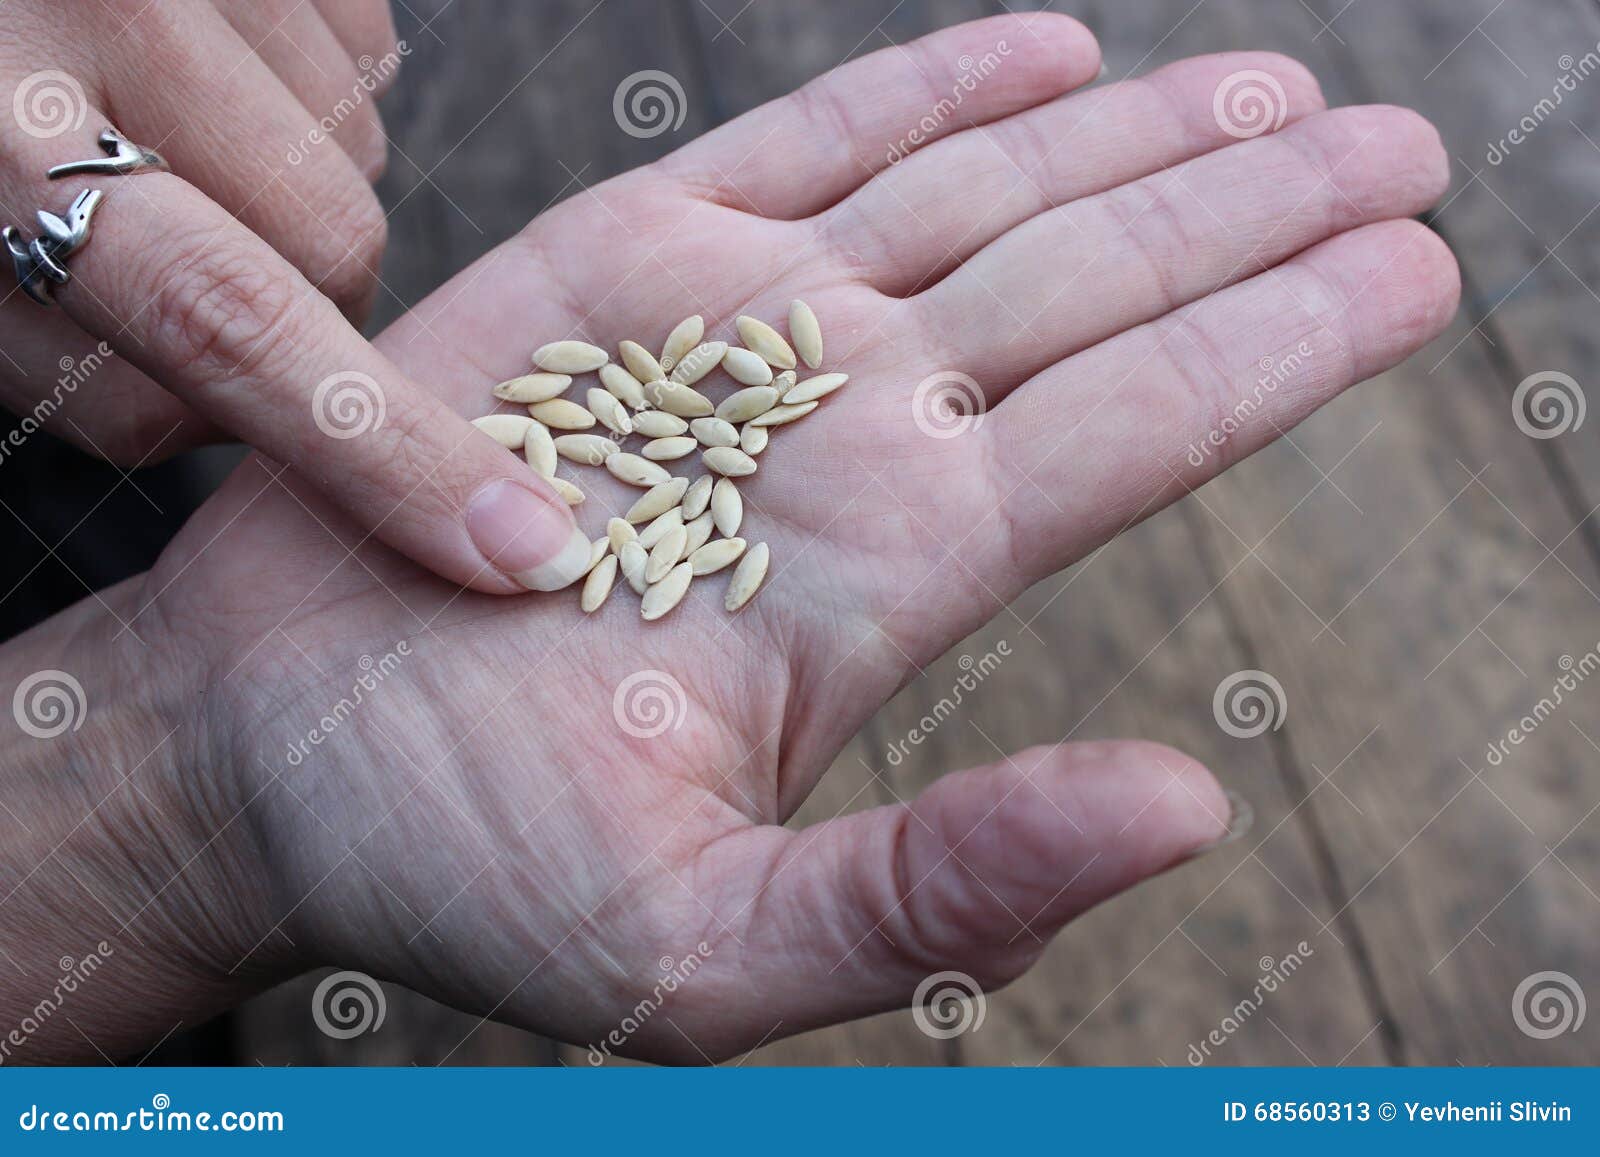 Какие семена для дачи. Семена. Семена огурцов на руке. Качественные семена. Некачественные семена.